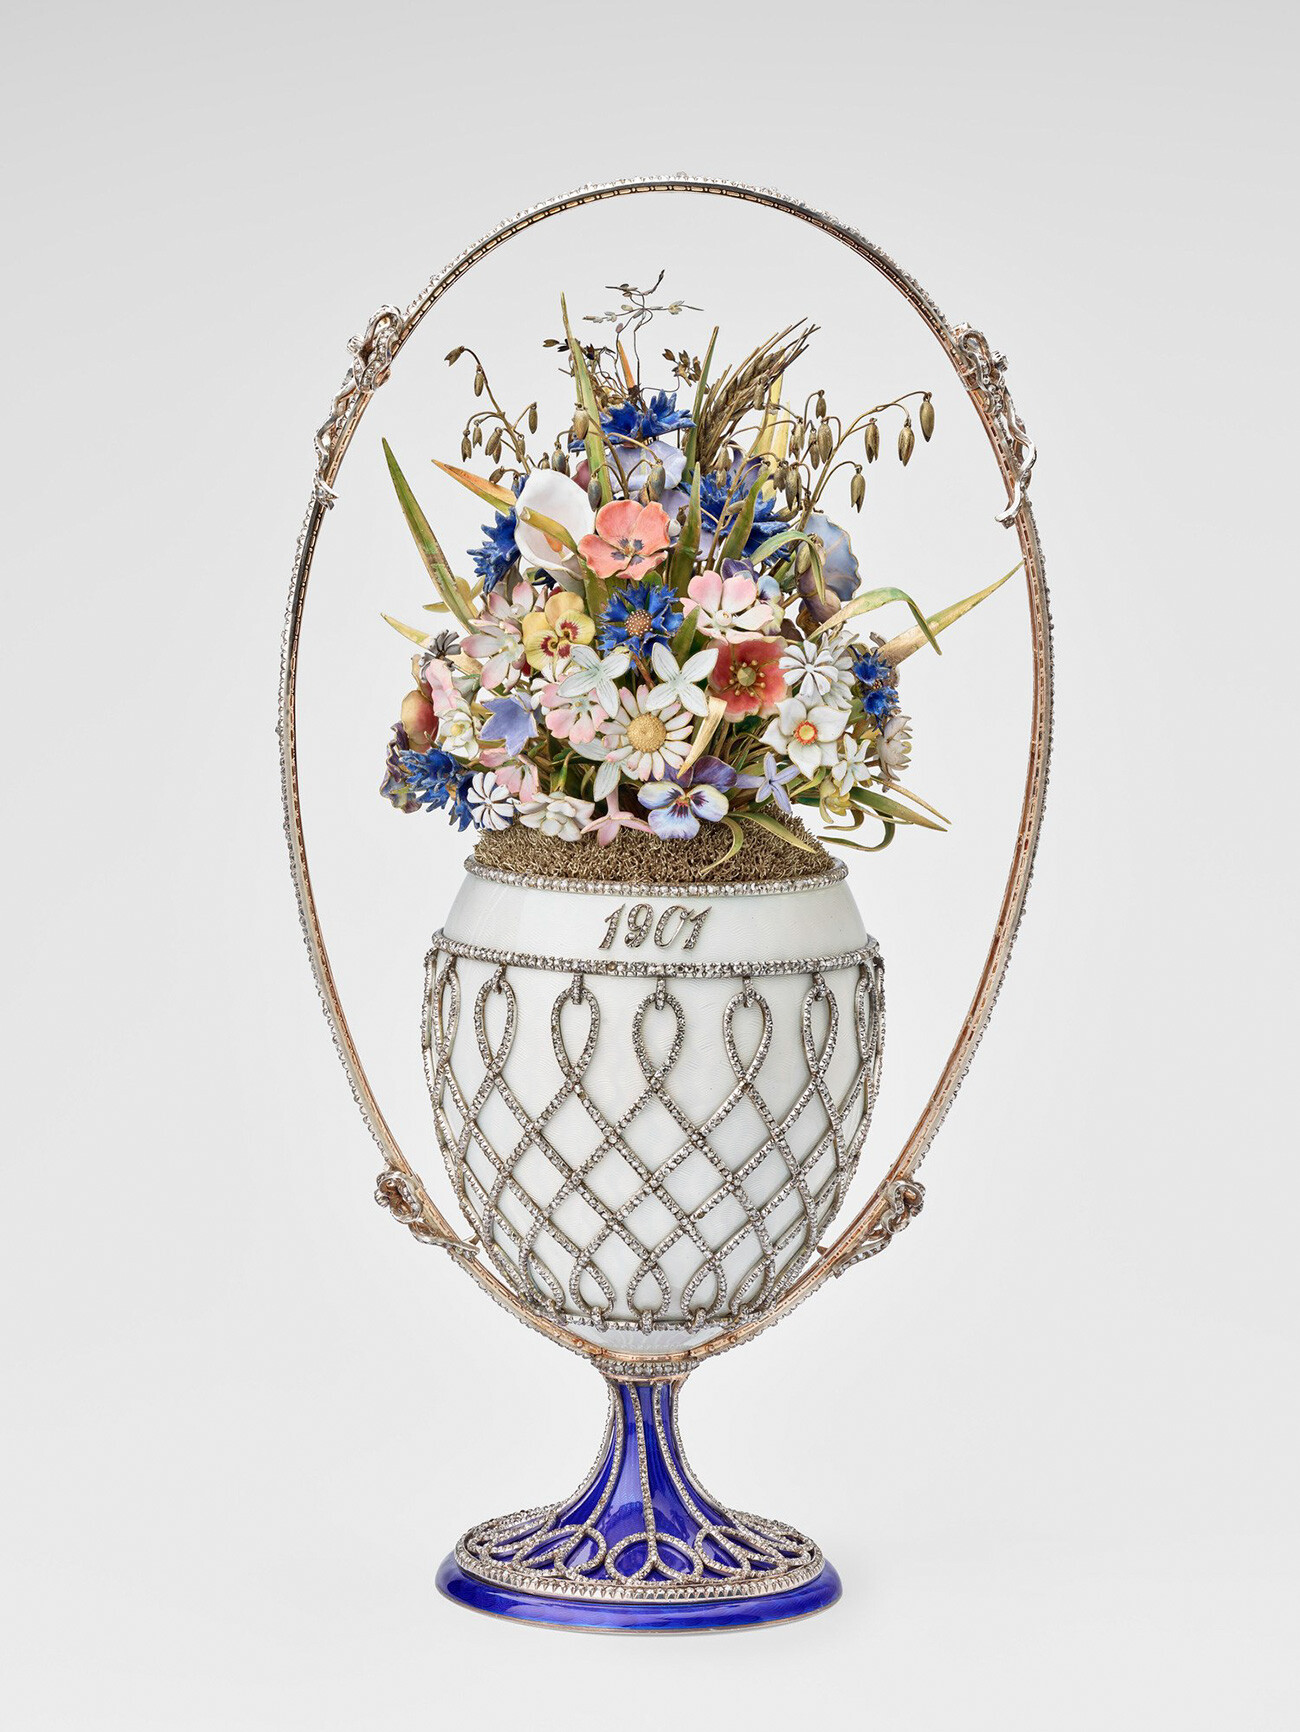 'Basket of flowers' (1901) Faberge egg